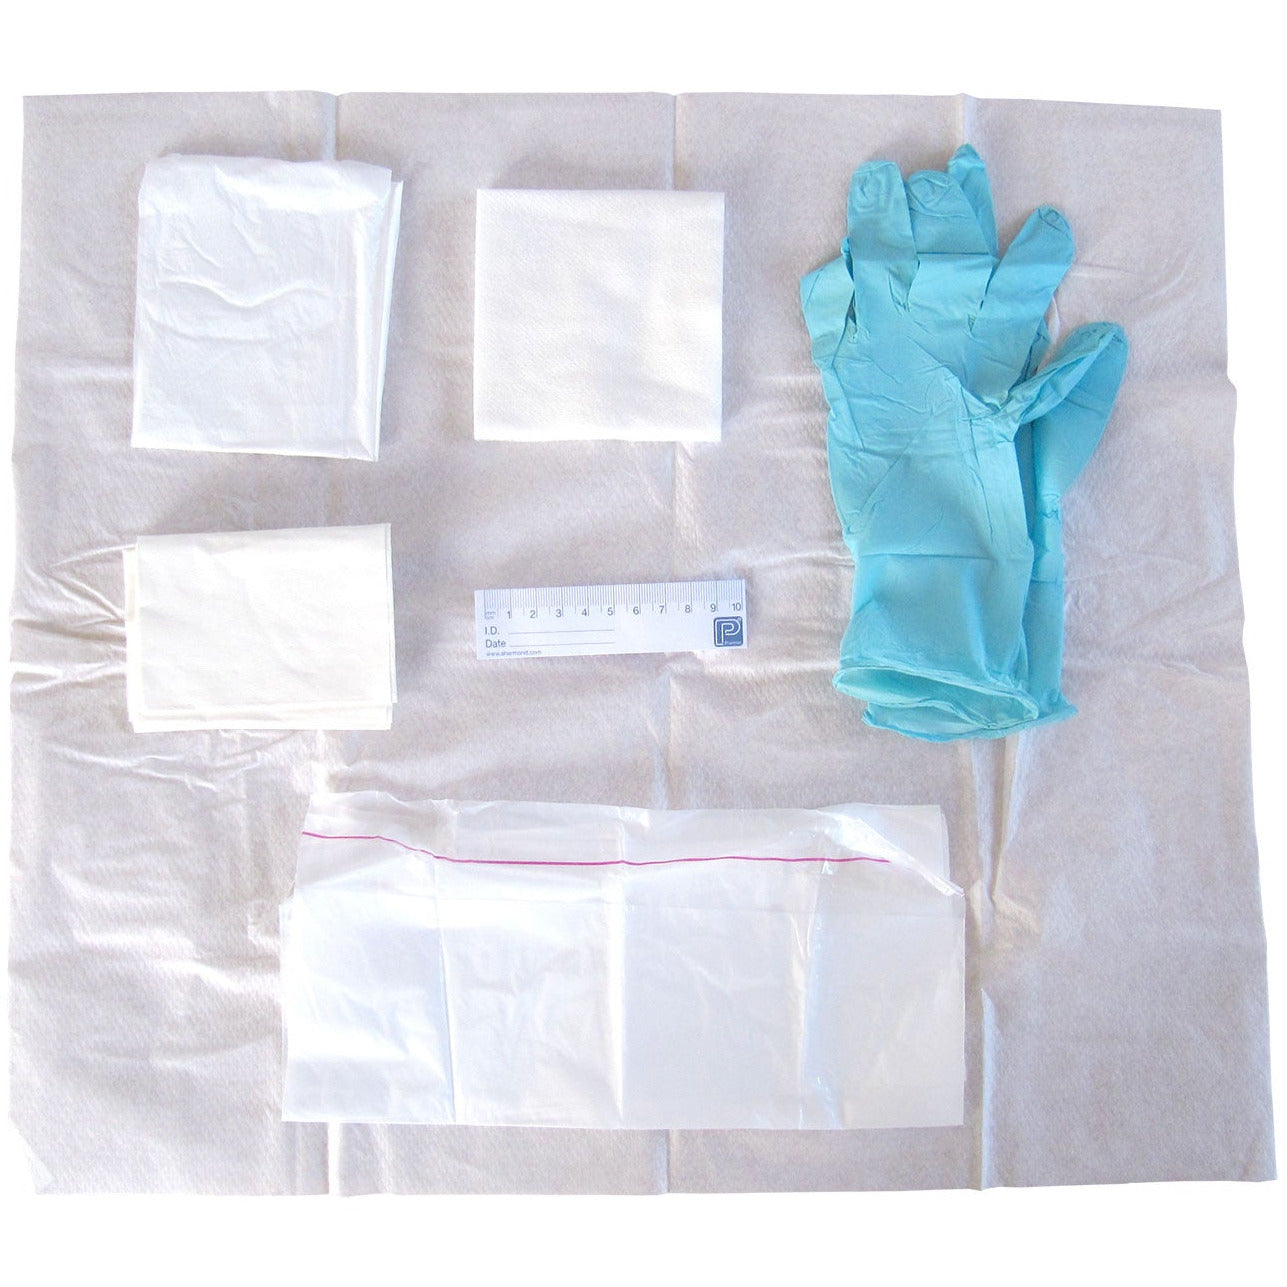 Polyfield Patient Pack with Vinyl Gloves - Medium